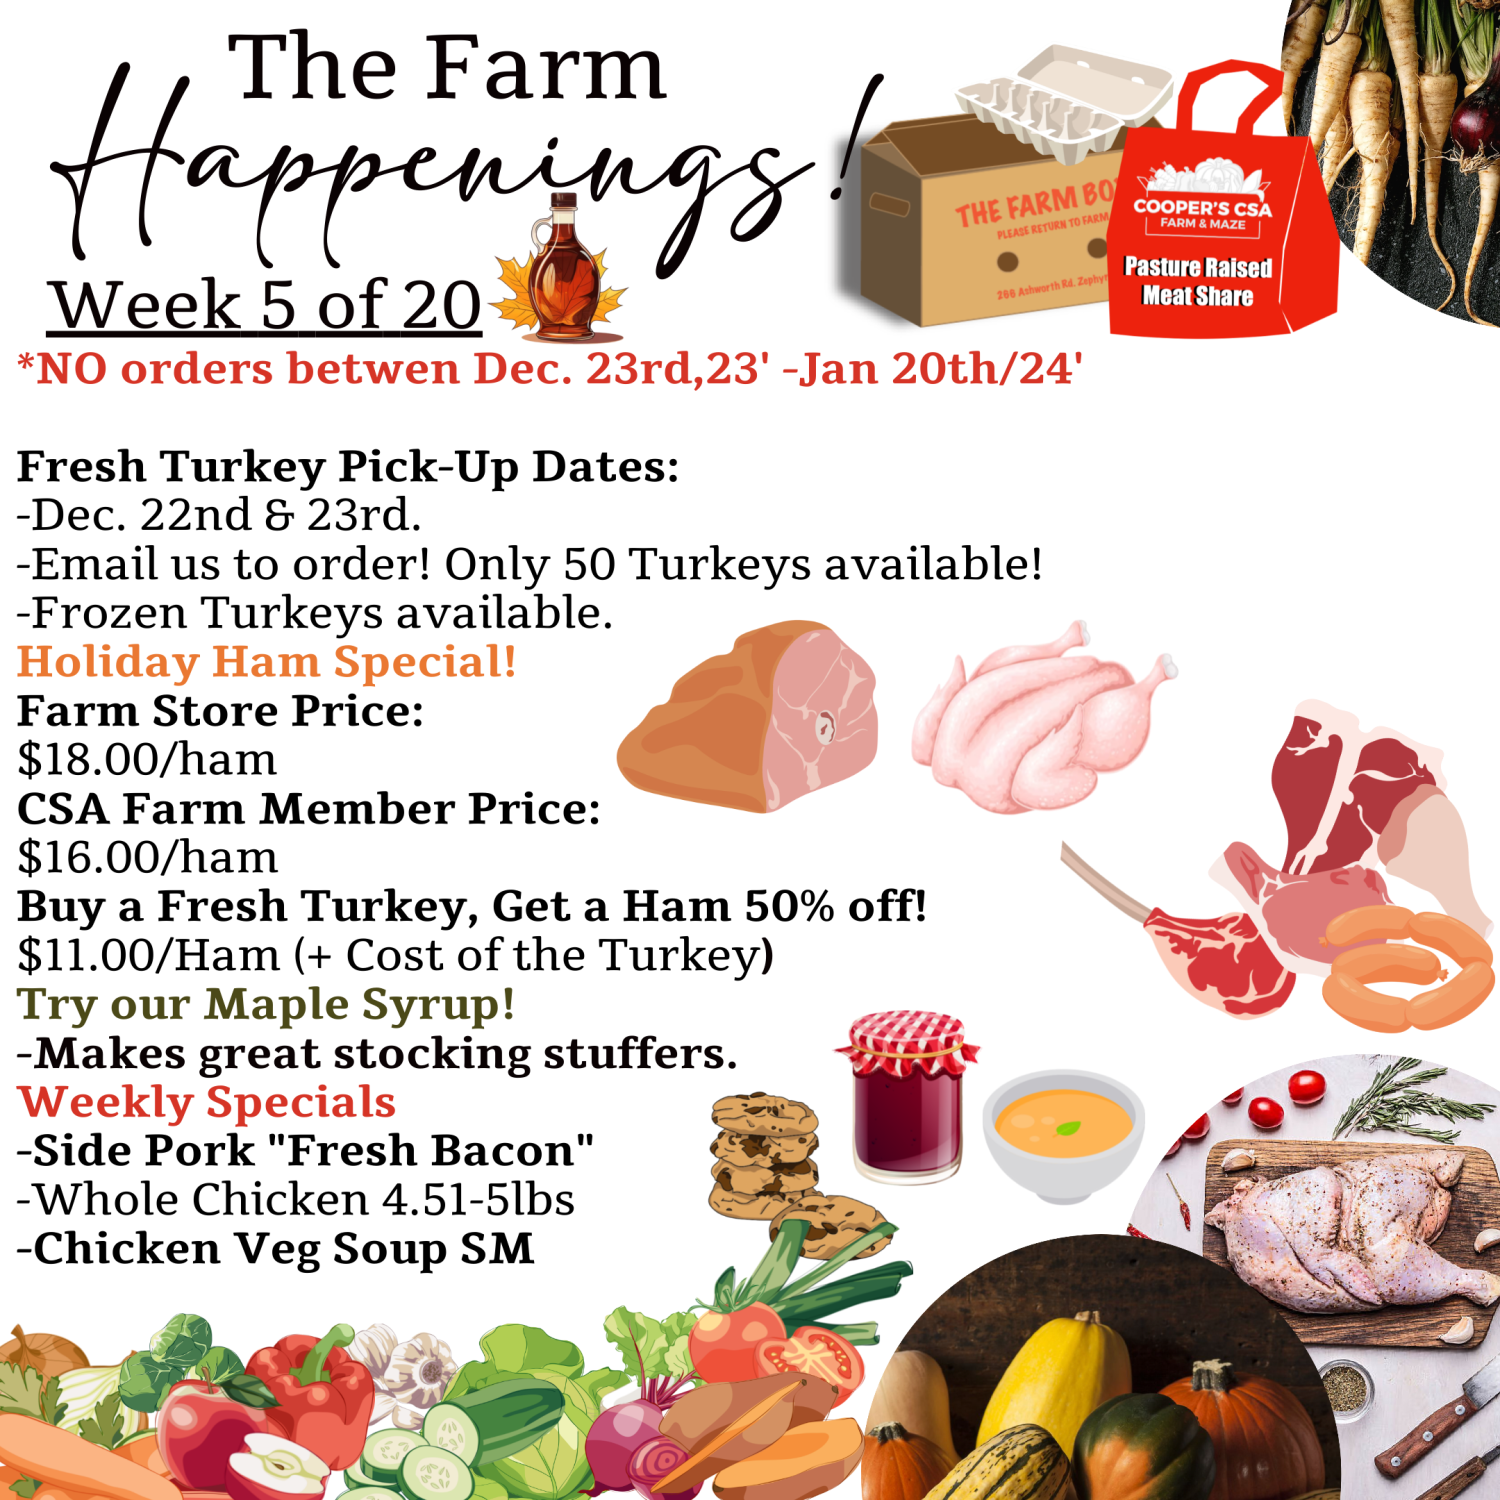 Next Happening: "The Farm Box"-Coopers CSA Farm Farm Happenings Dec. 12-16th